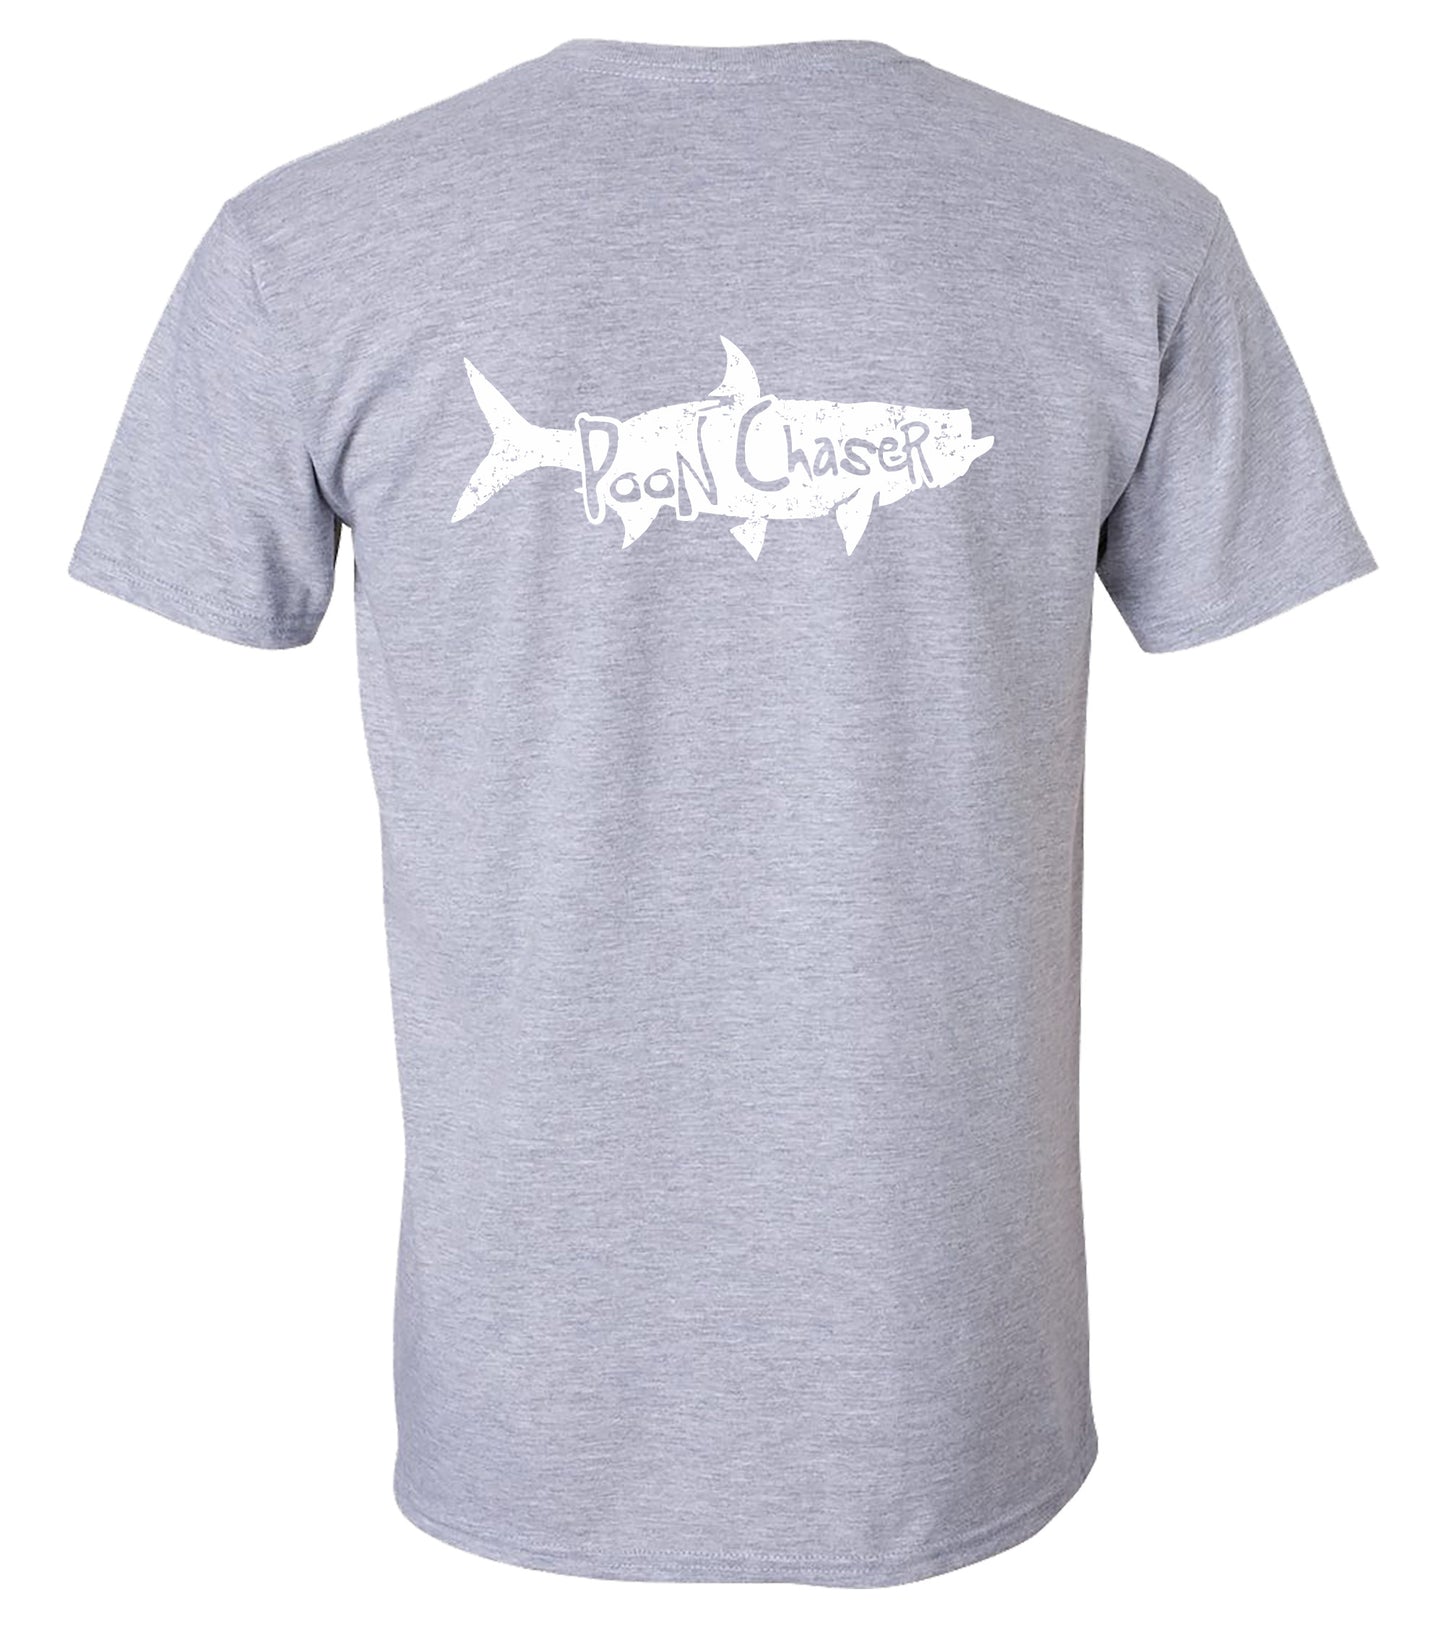 Tarpon "Poon Chaser" Reel Fishy t-shirt - Hthr Lt. Gray w/White logo